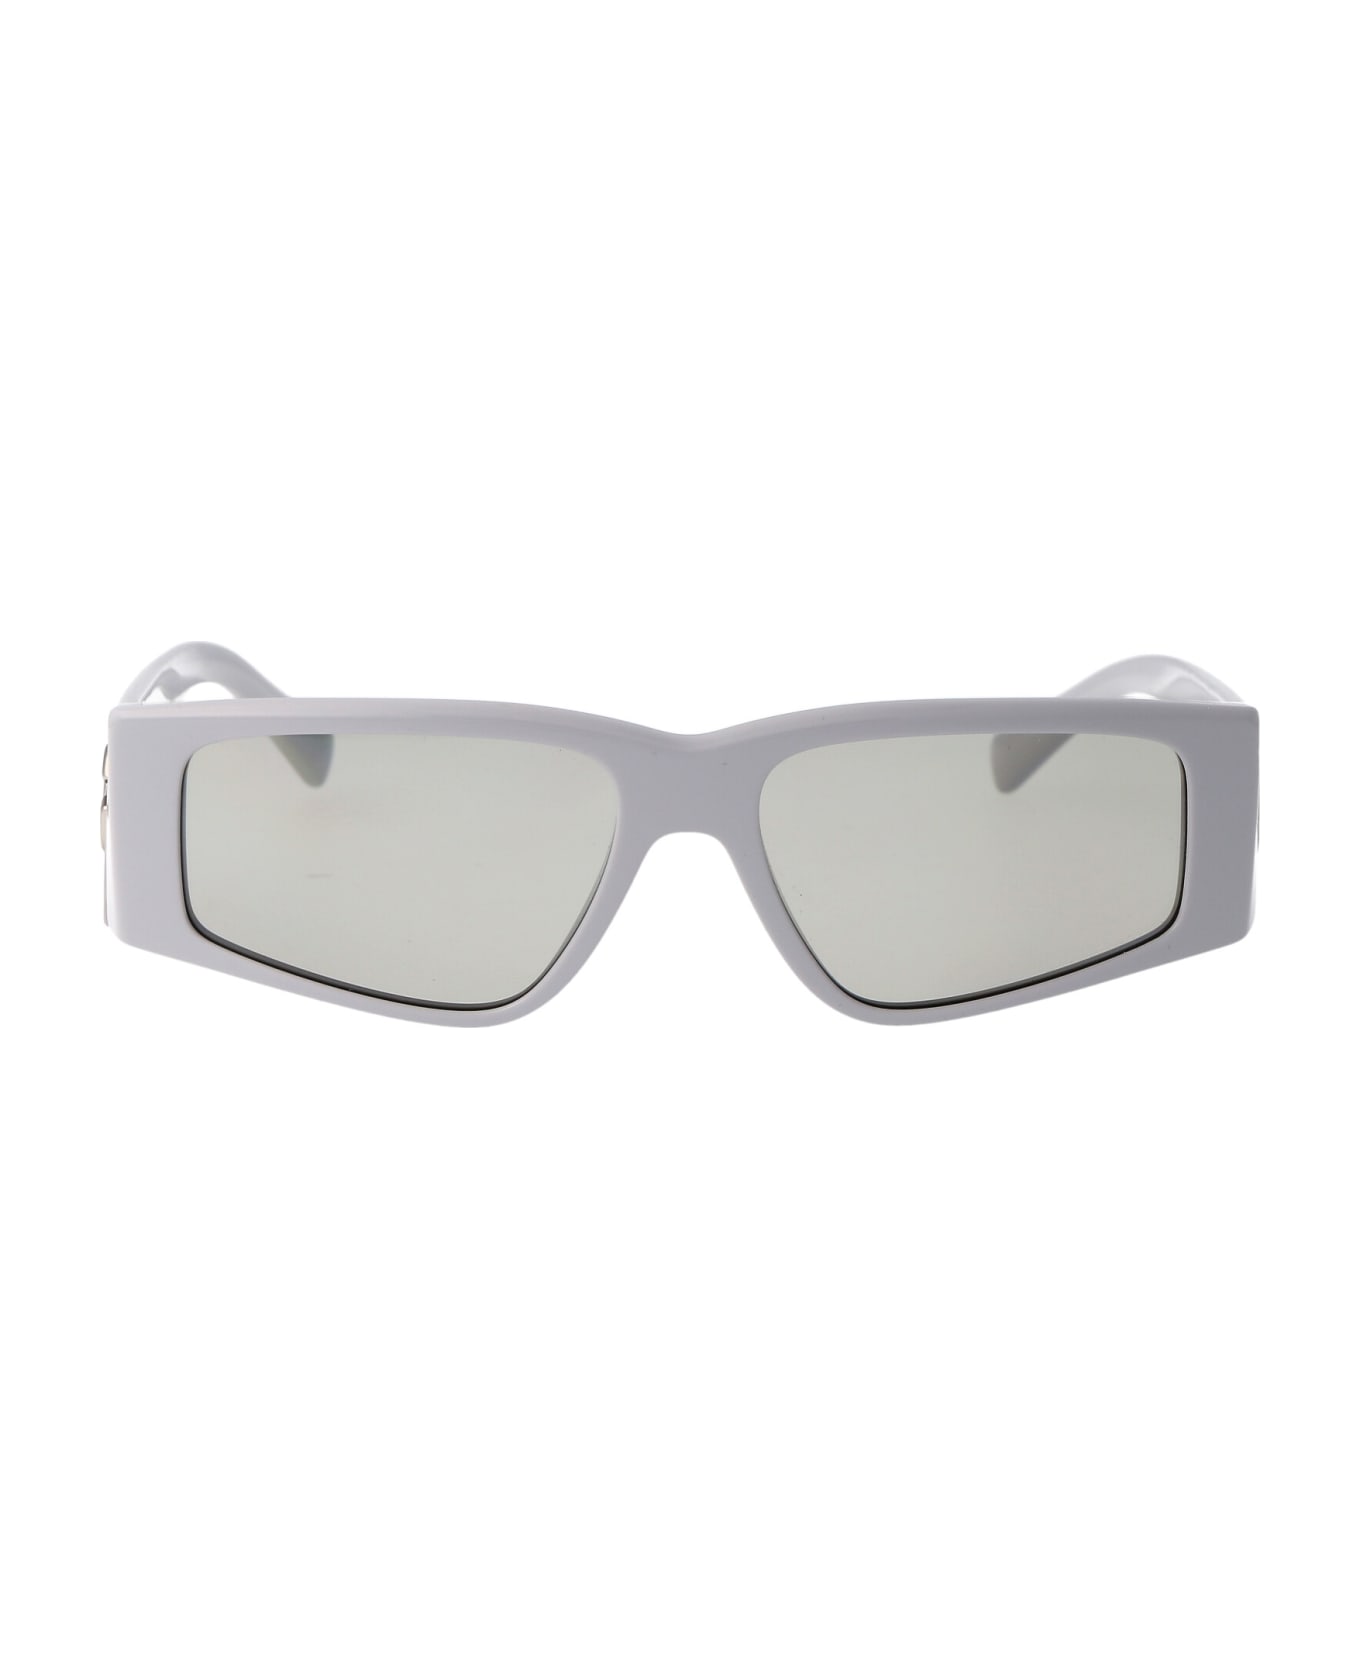 Dolce & Gabbana Eyewear 0dg4453 Sunglasses - 341887 Light Grey